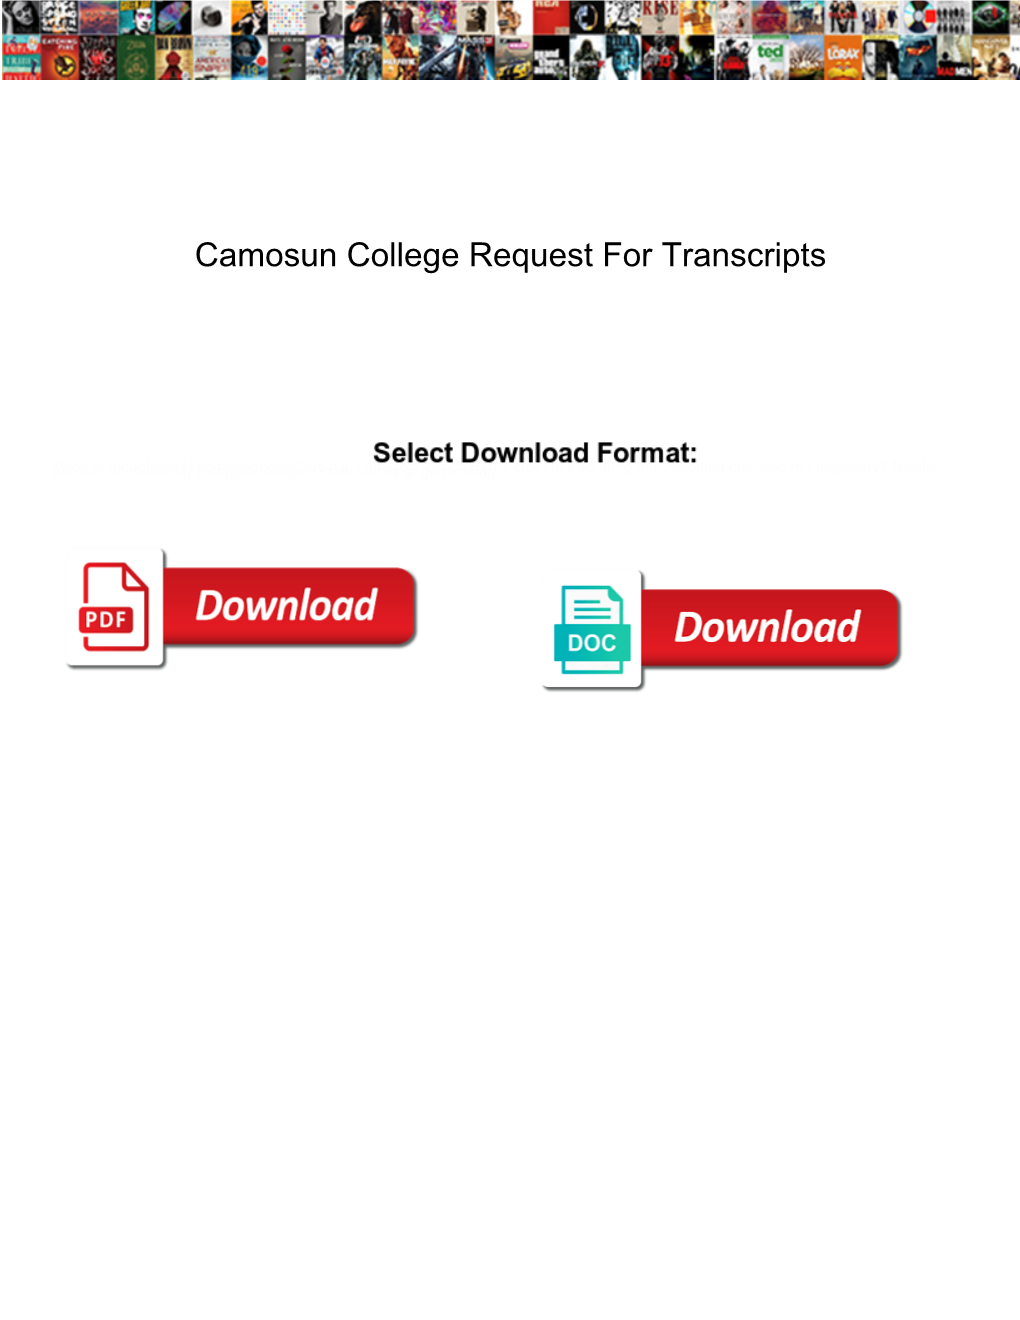 Camosun College Request for Transcripts